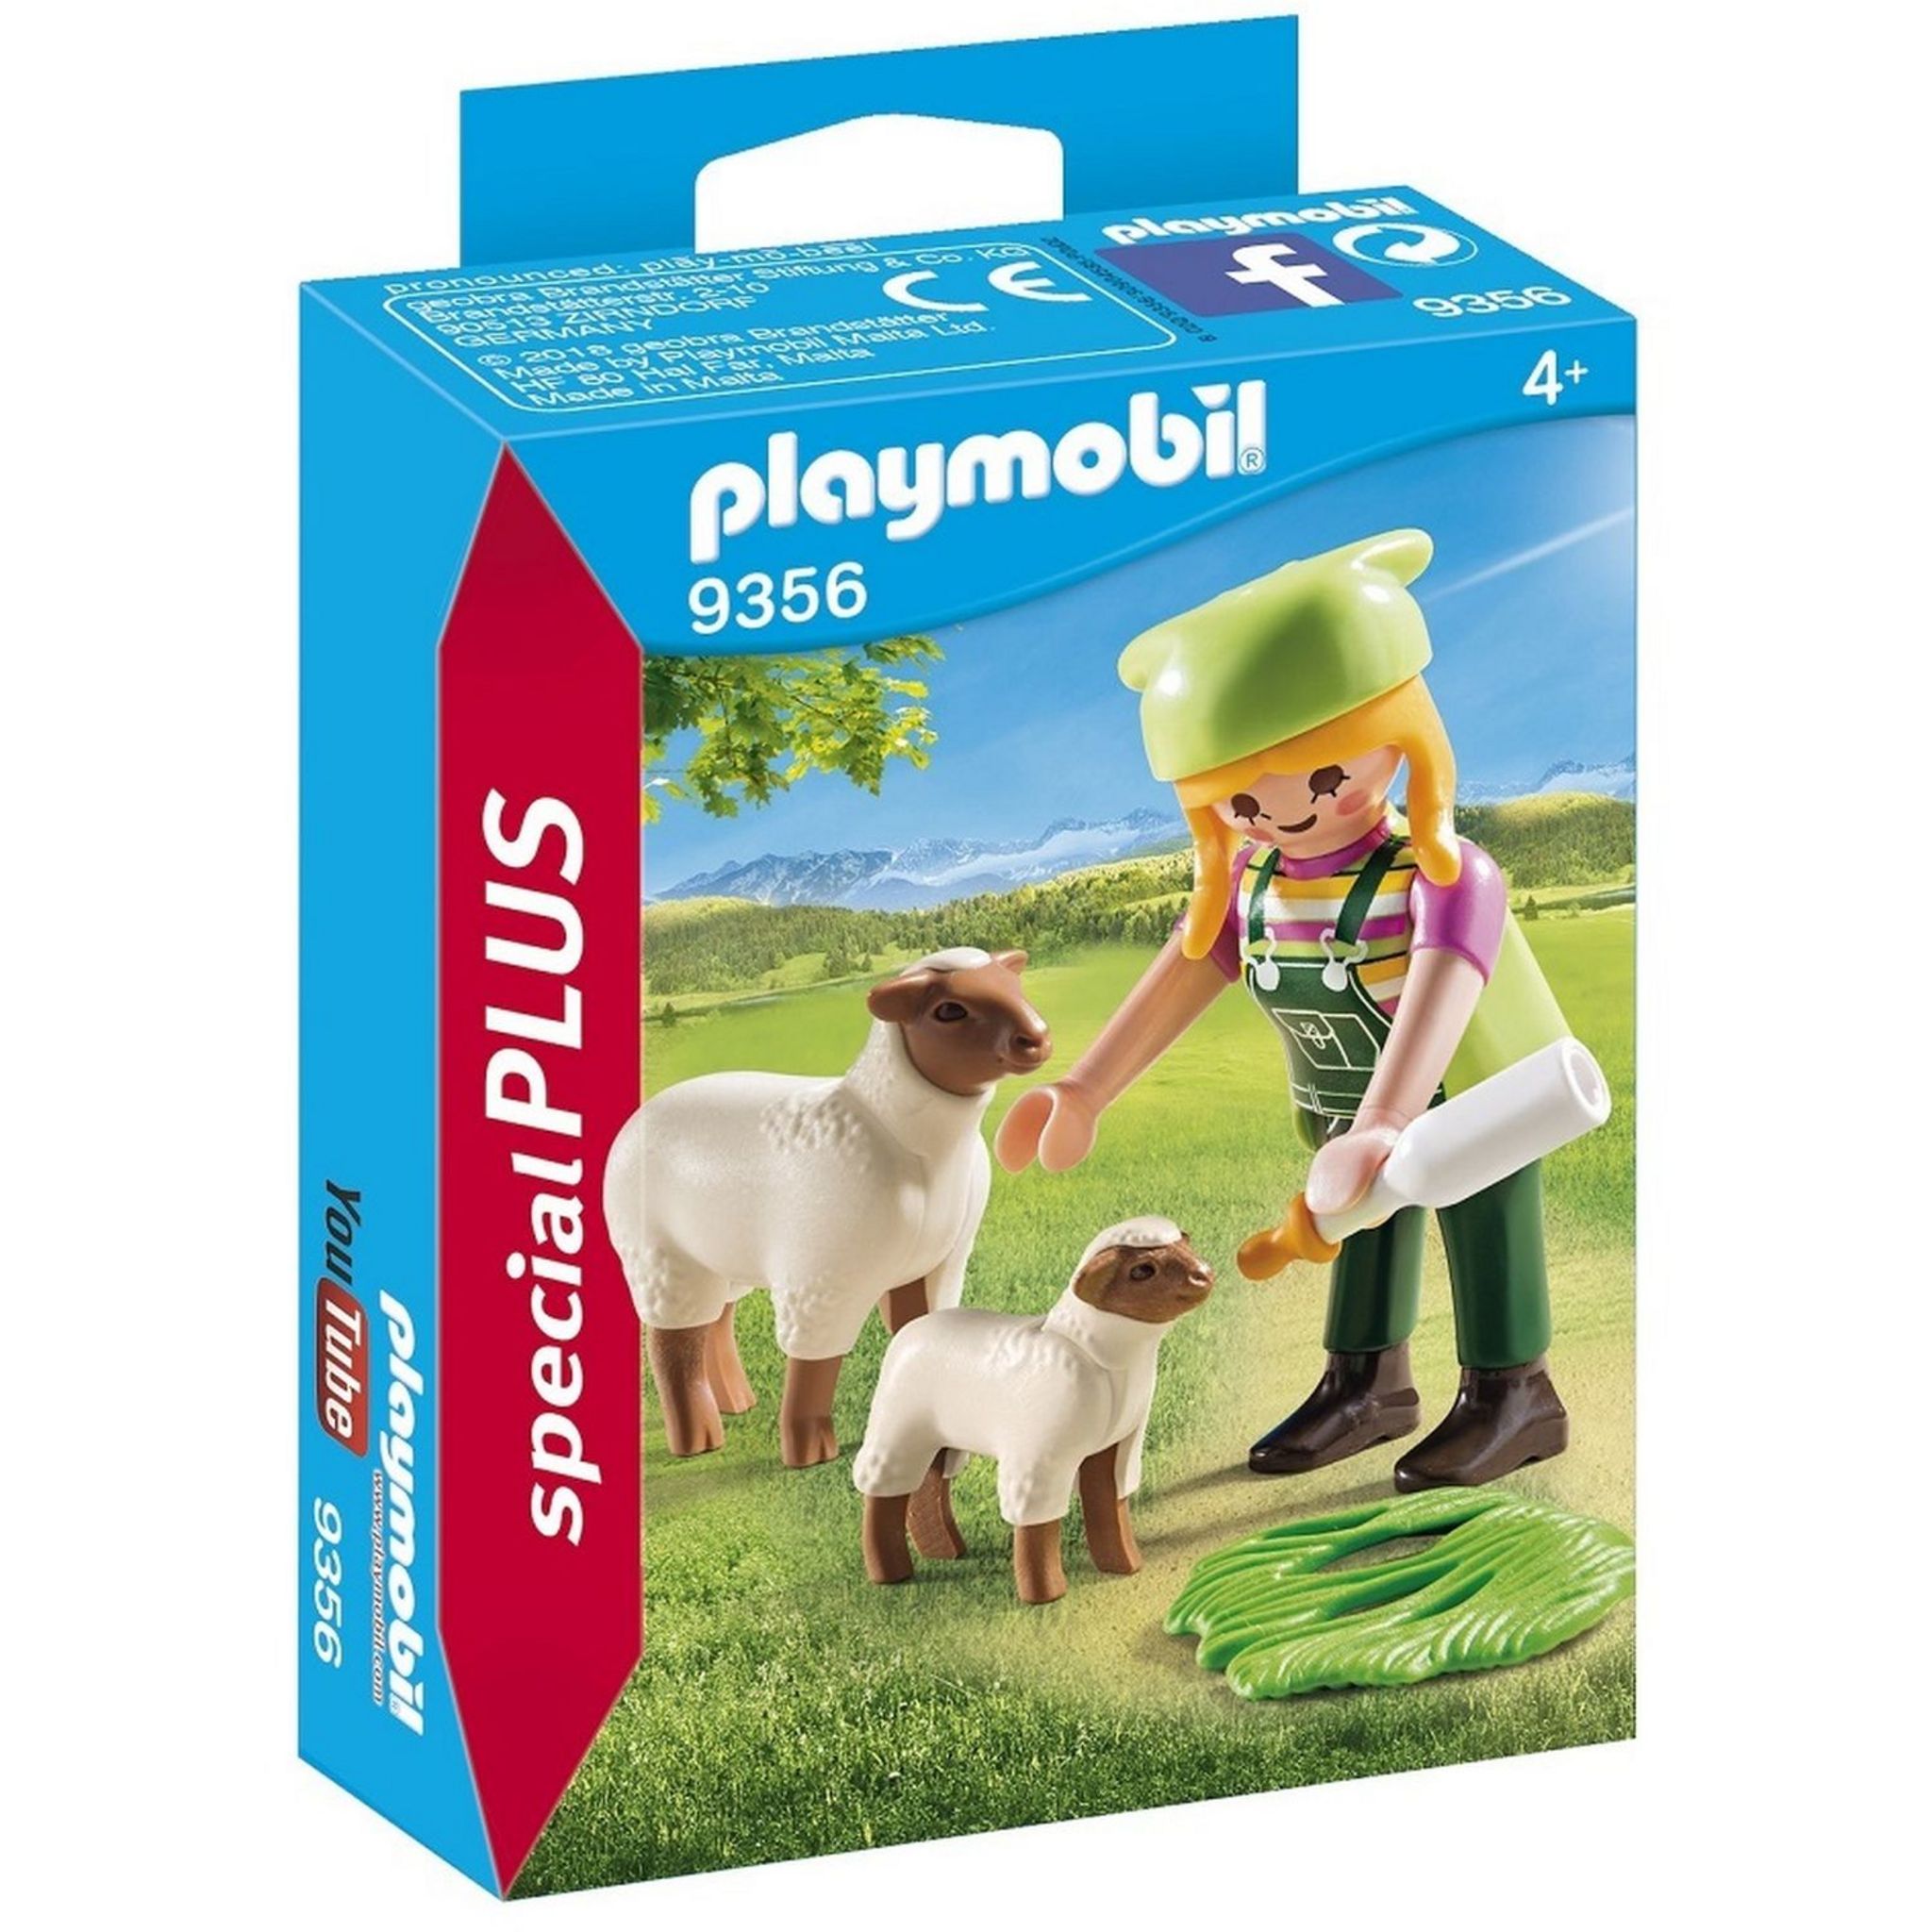 PLAYMOBIL HEIDI 70257 - Épicerie de la famille Keller Playmobil